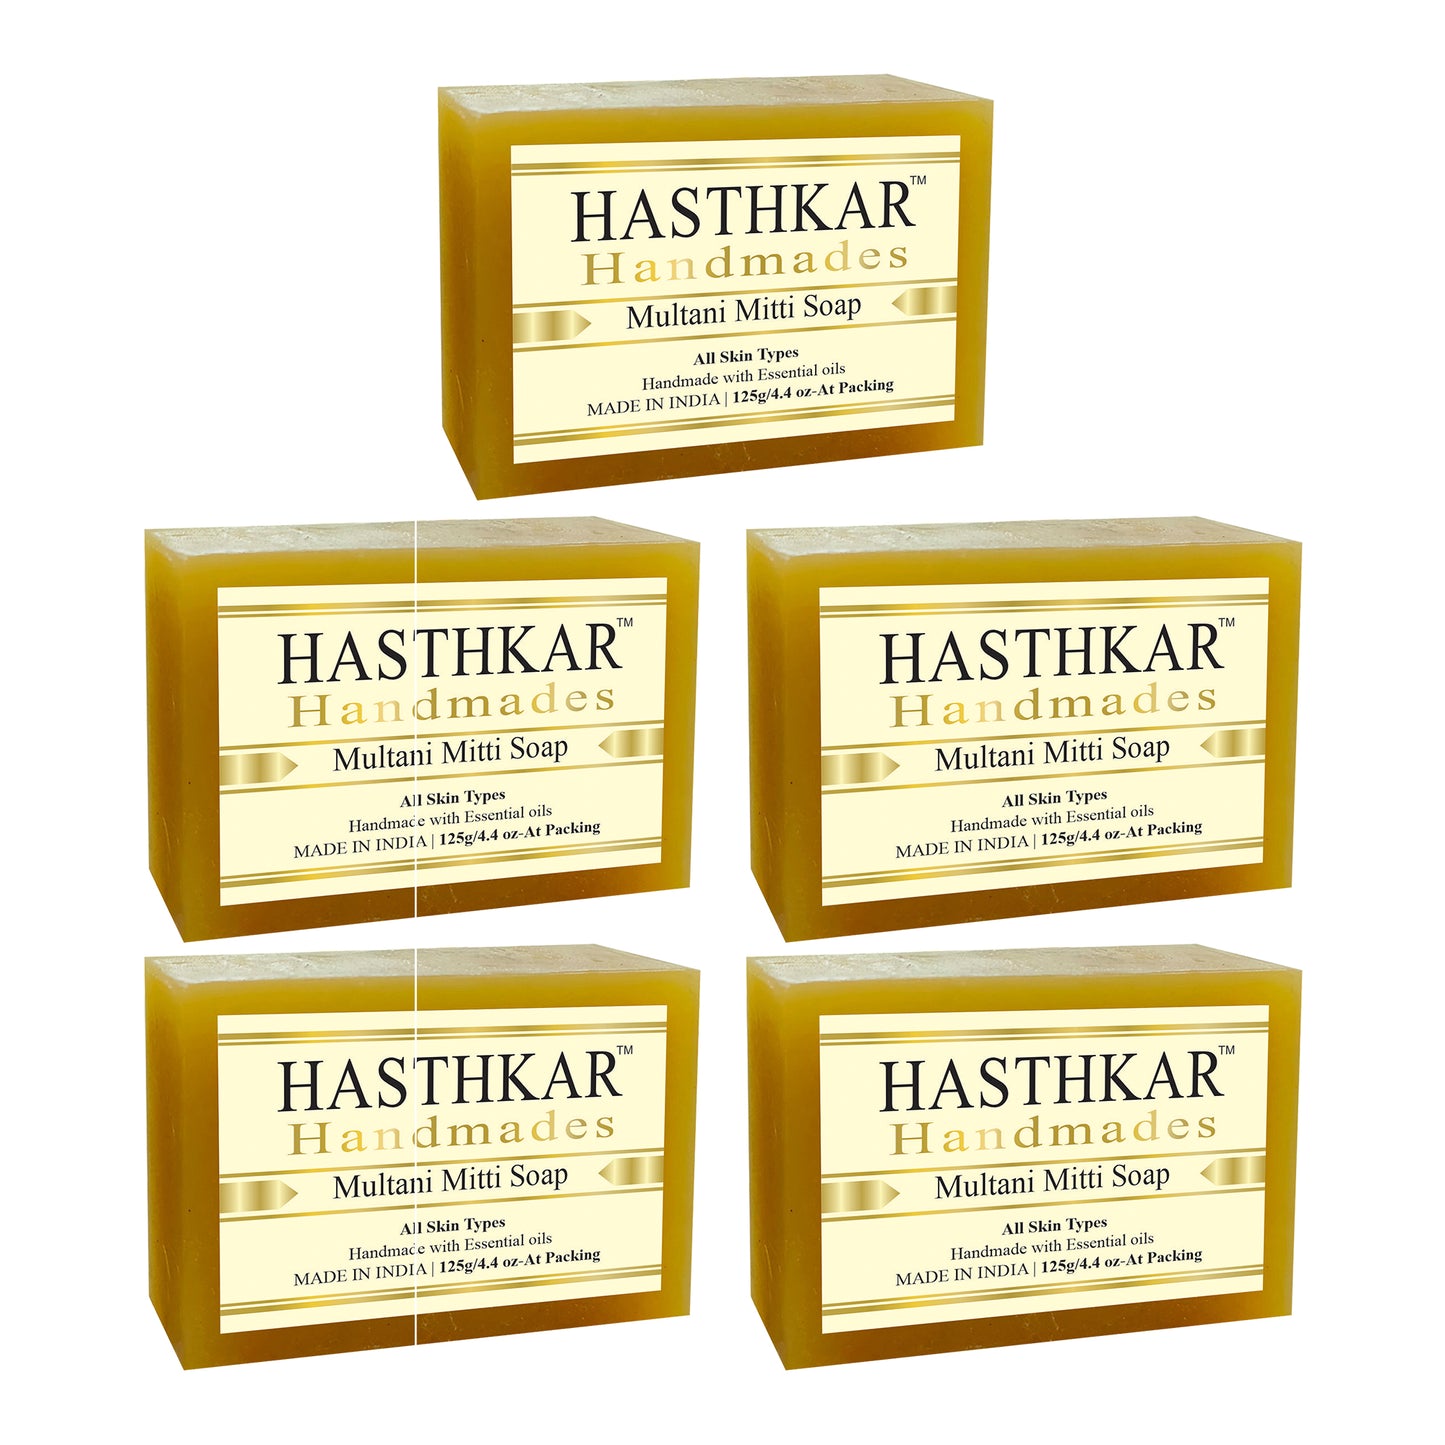 Hasthkar Handmades Glycerine Multani Mitti Soap 125gm Pack of 5